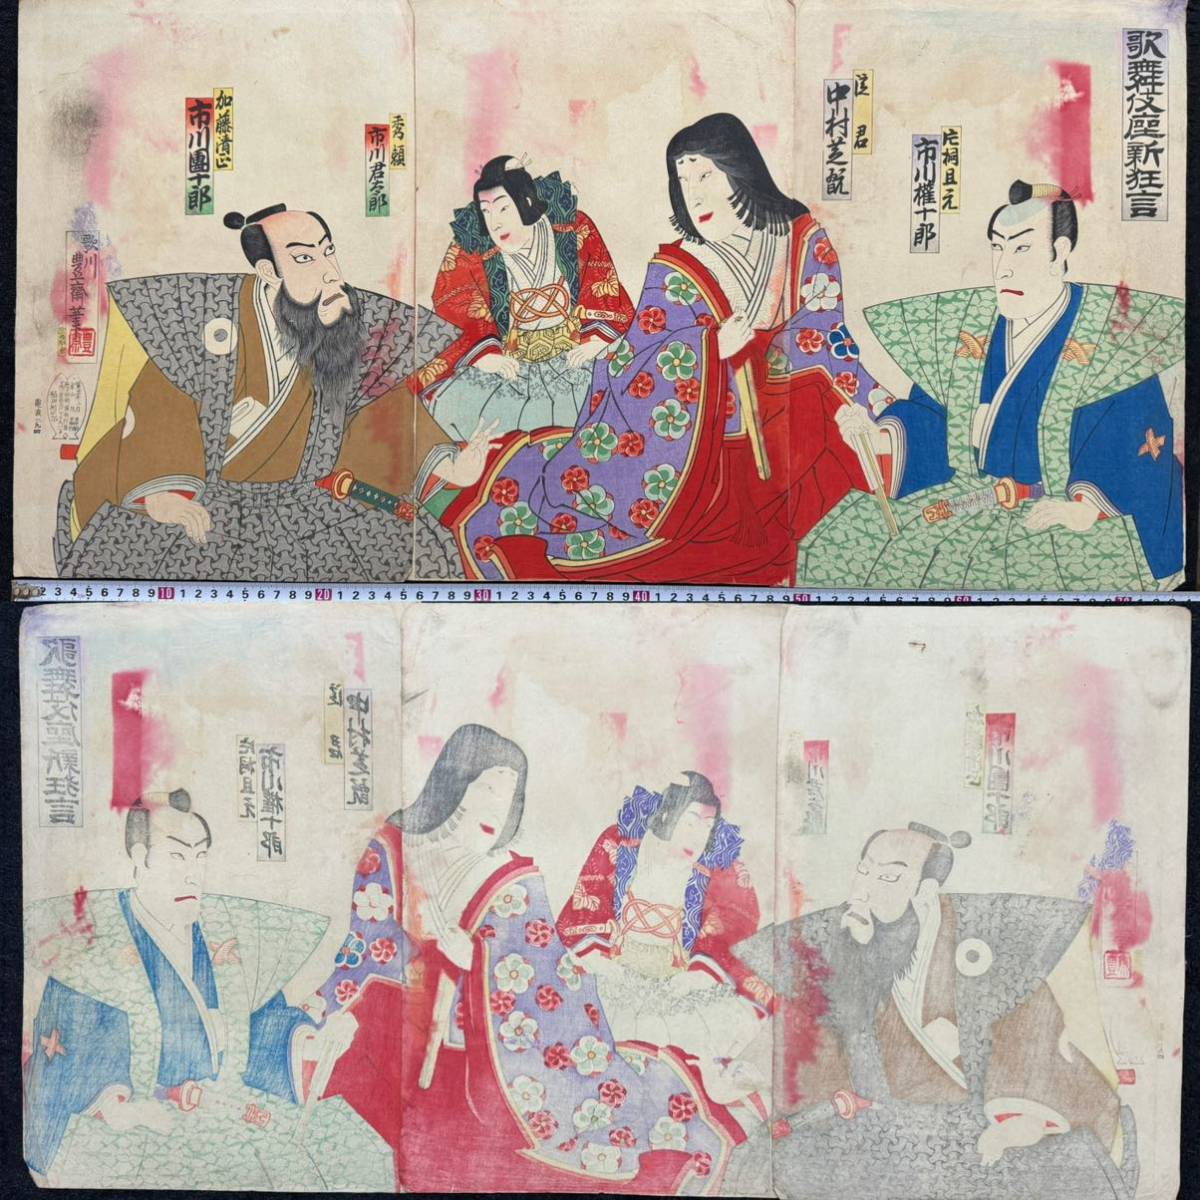 Meiji-Zeit/Authentischer Utagawa Hosai Kabukiza March Kyogen Echter Ukiyo-e Holzschnitt Kabuki-Bild Schauspielerbild Spielbild Nishiki-e Großes Triptychon, Malerei, Ukiyo-e, Drucke, Kabuki-Malerei, Schauspieler Gemälde